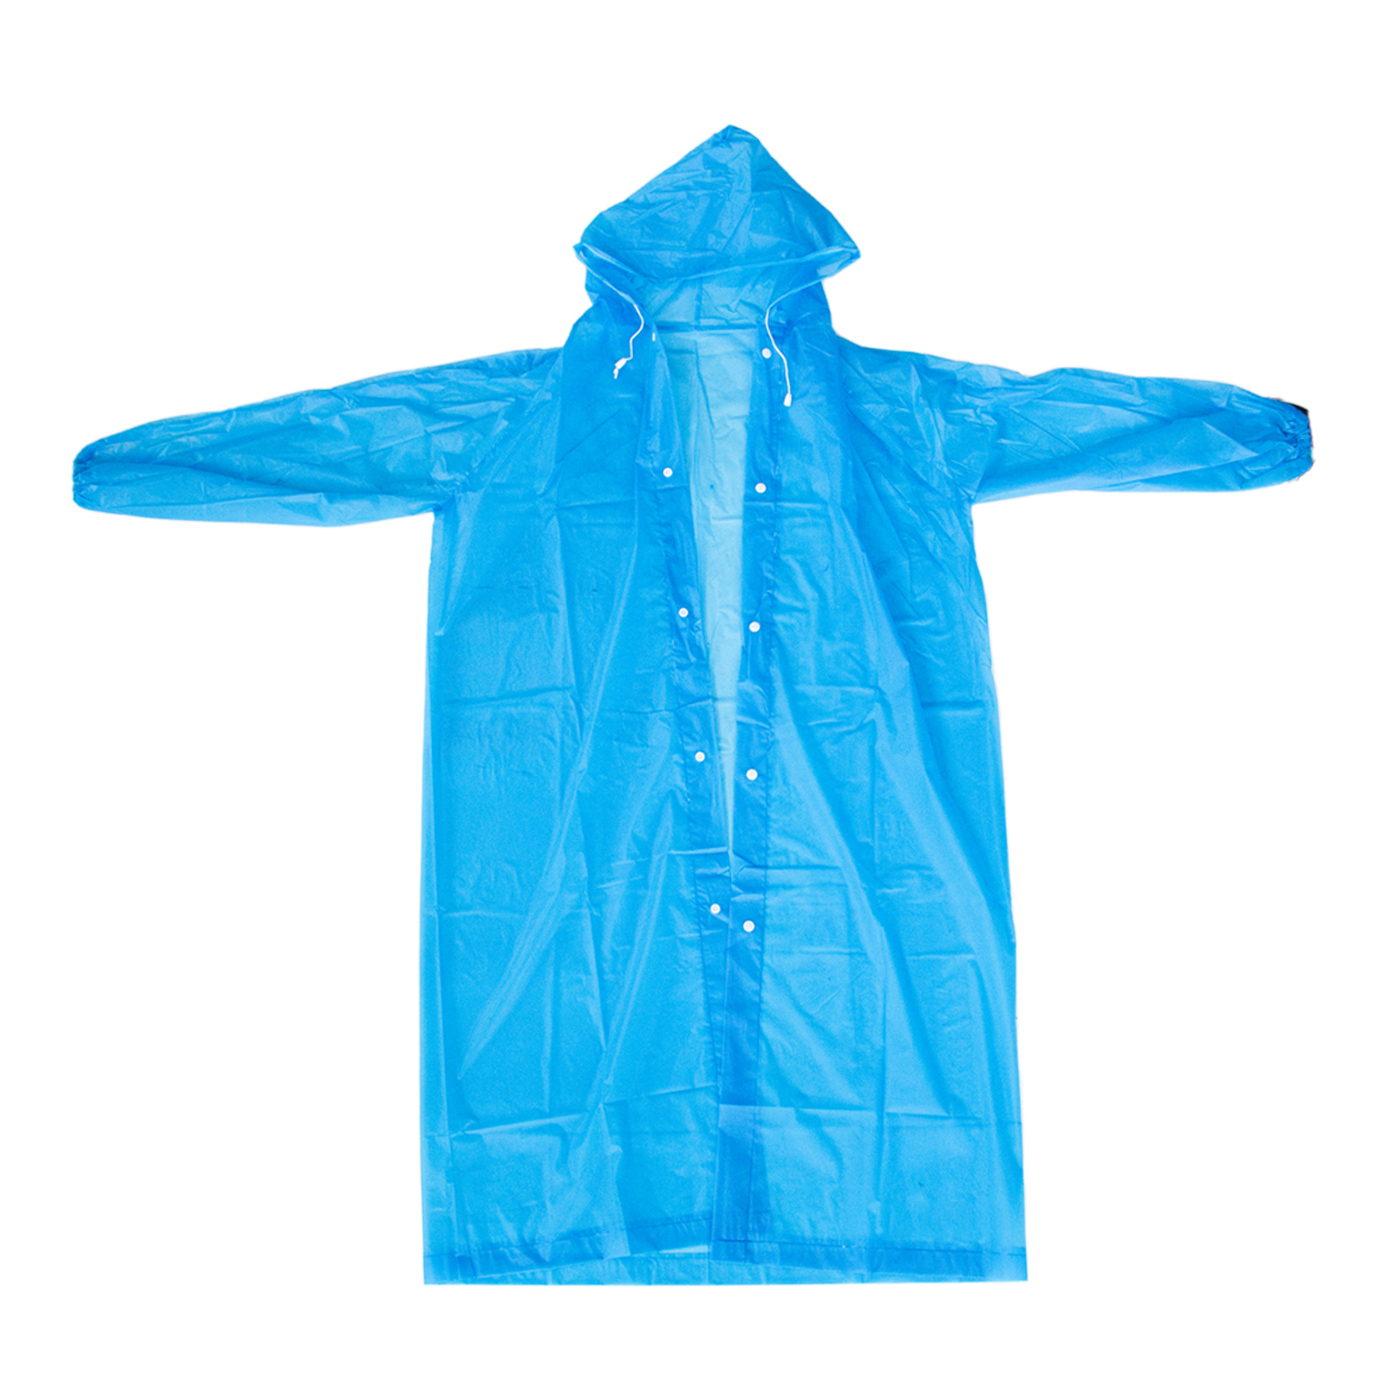 Adults Reusable Raincoat